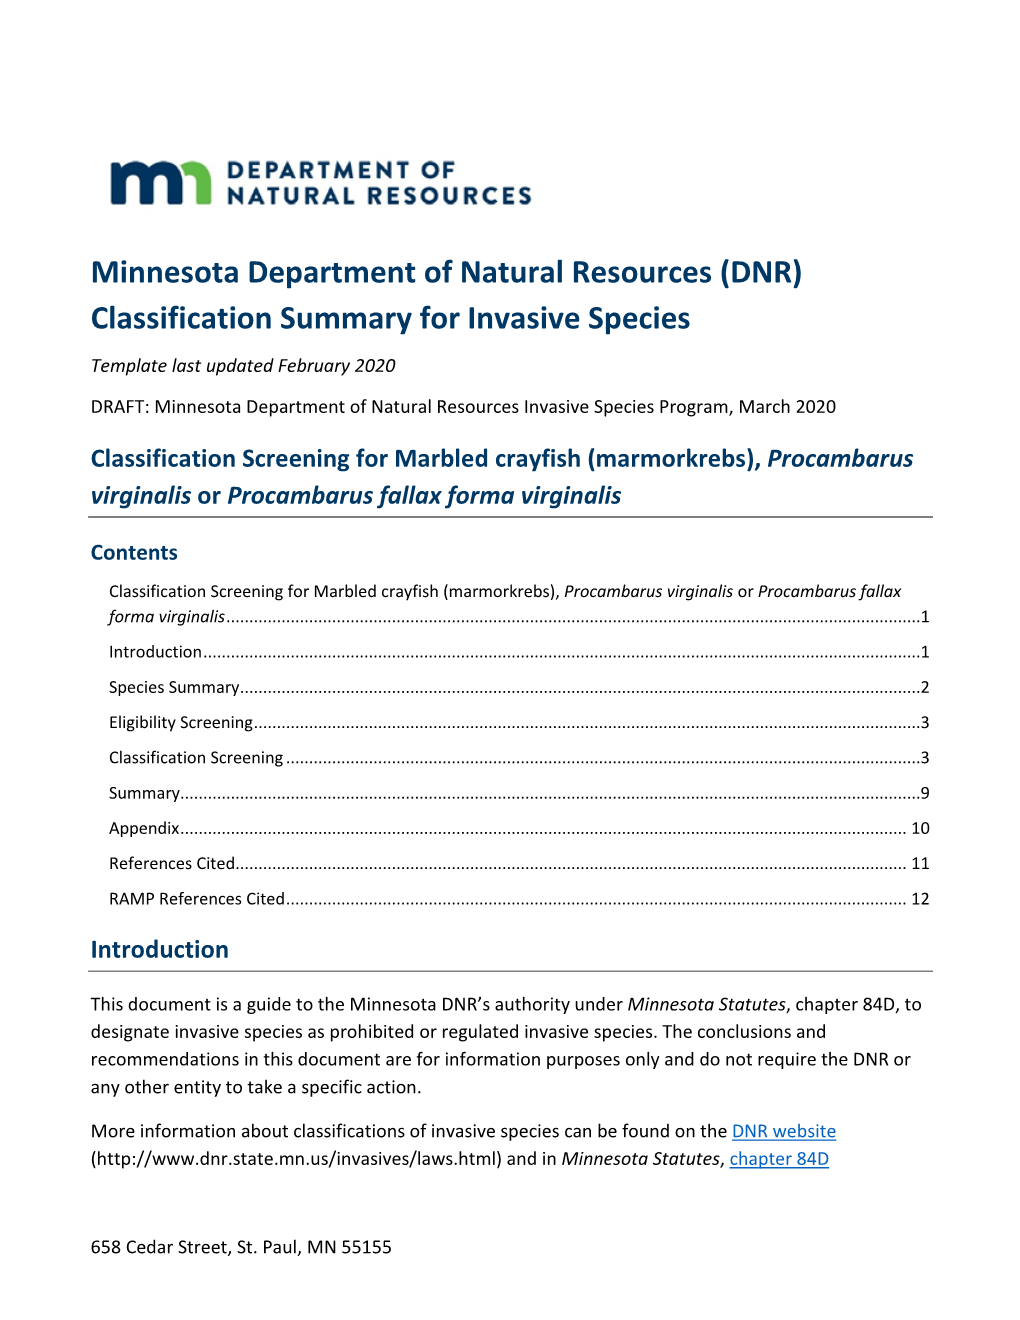 Draft Invasive Species Classification Screening